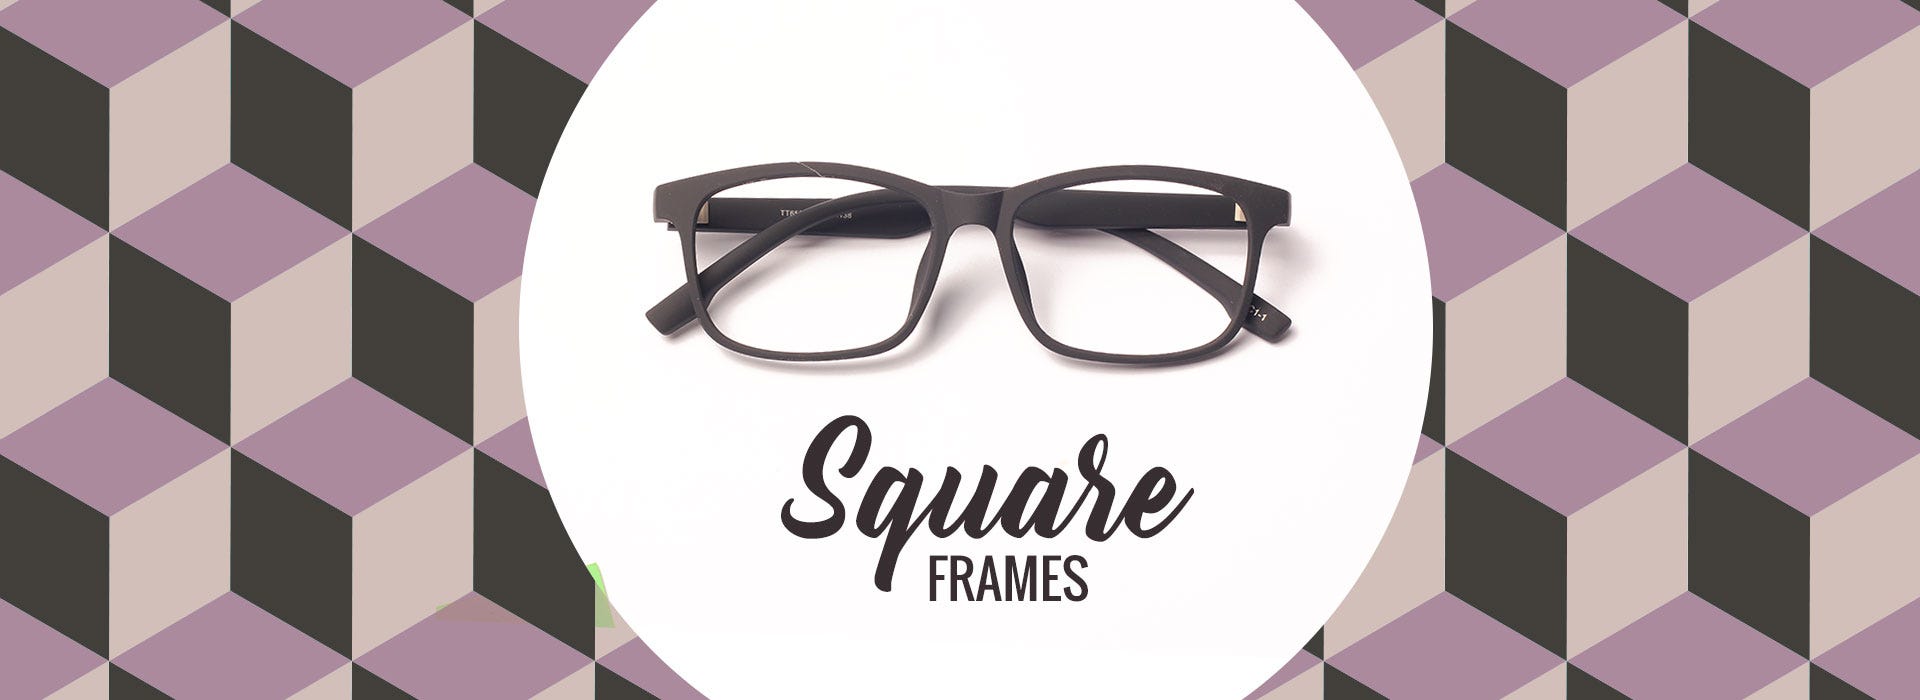 Buy Square Eyeglasses at Goggles4U